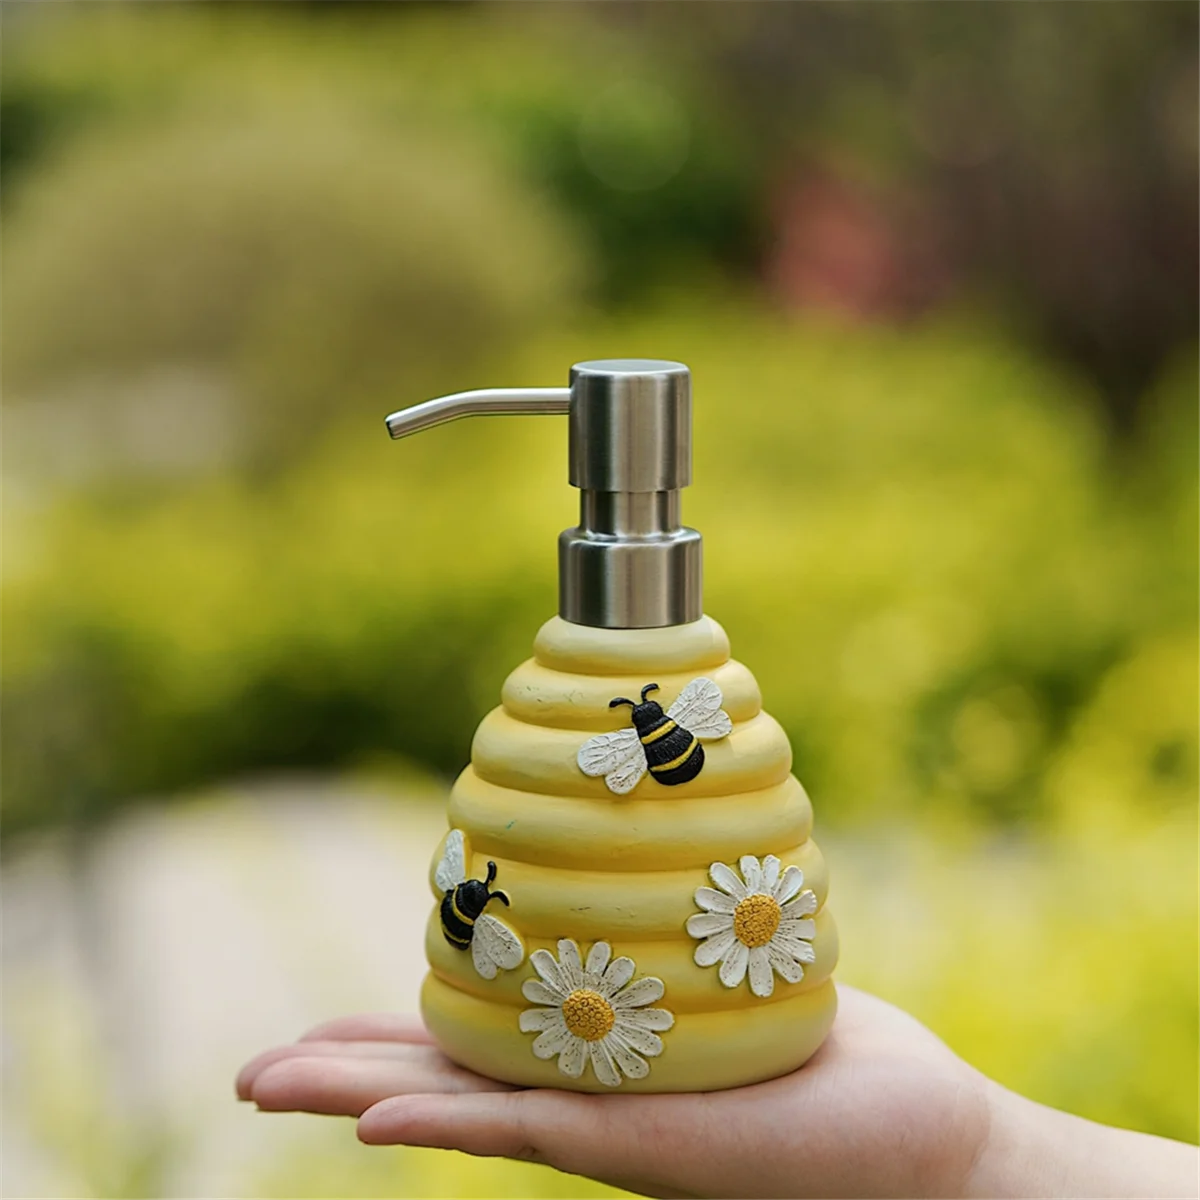 

Bee Soap Dispenser Decorative Hand Pump Refillable Soap Dispenser Liquid Container for Shampoo Lotion Dispenser Novelty